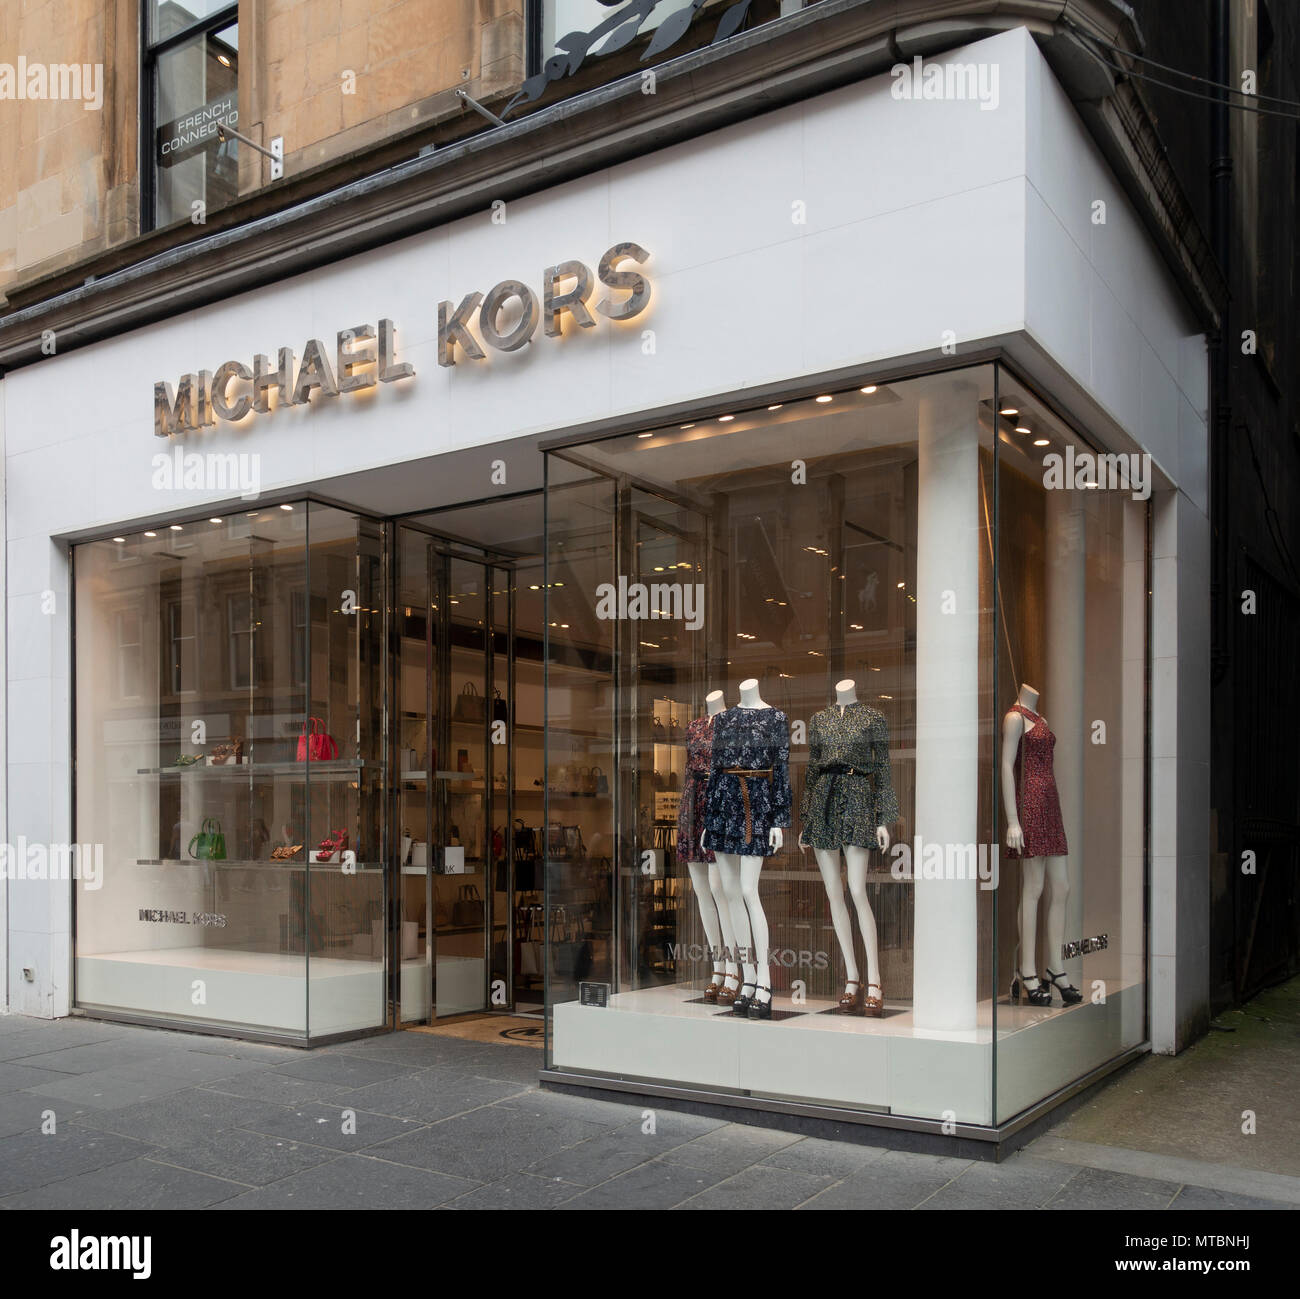 Michael kors shop window -Fotos und -Bildmaterial in hoher Auflösung – Alamy